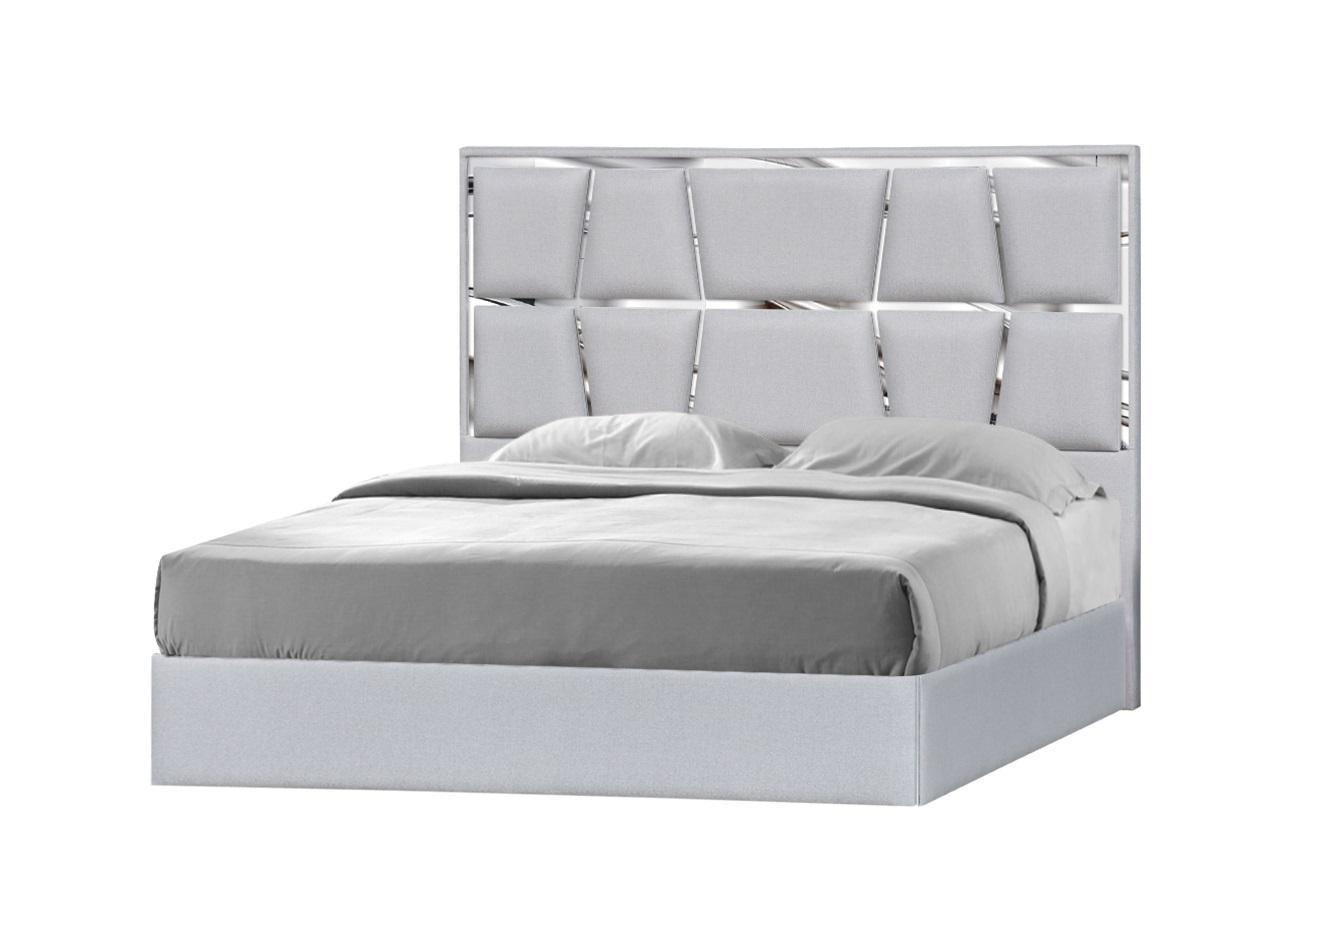 Contemporary Platform Bed Degas SKU 18721-Q-Bed in Light Gray Fabric